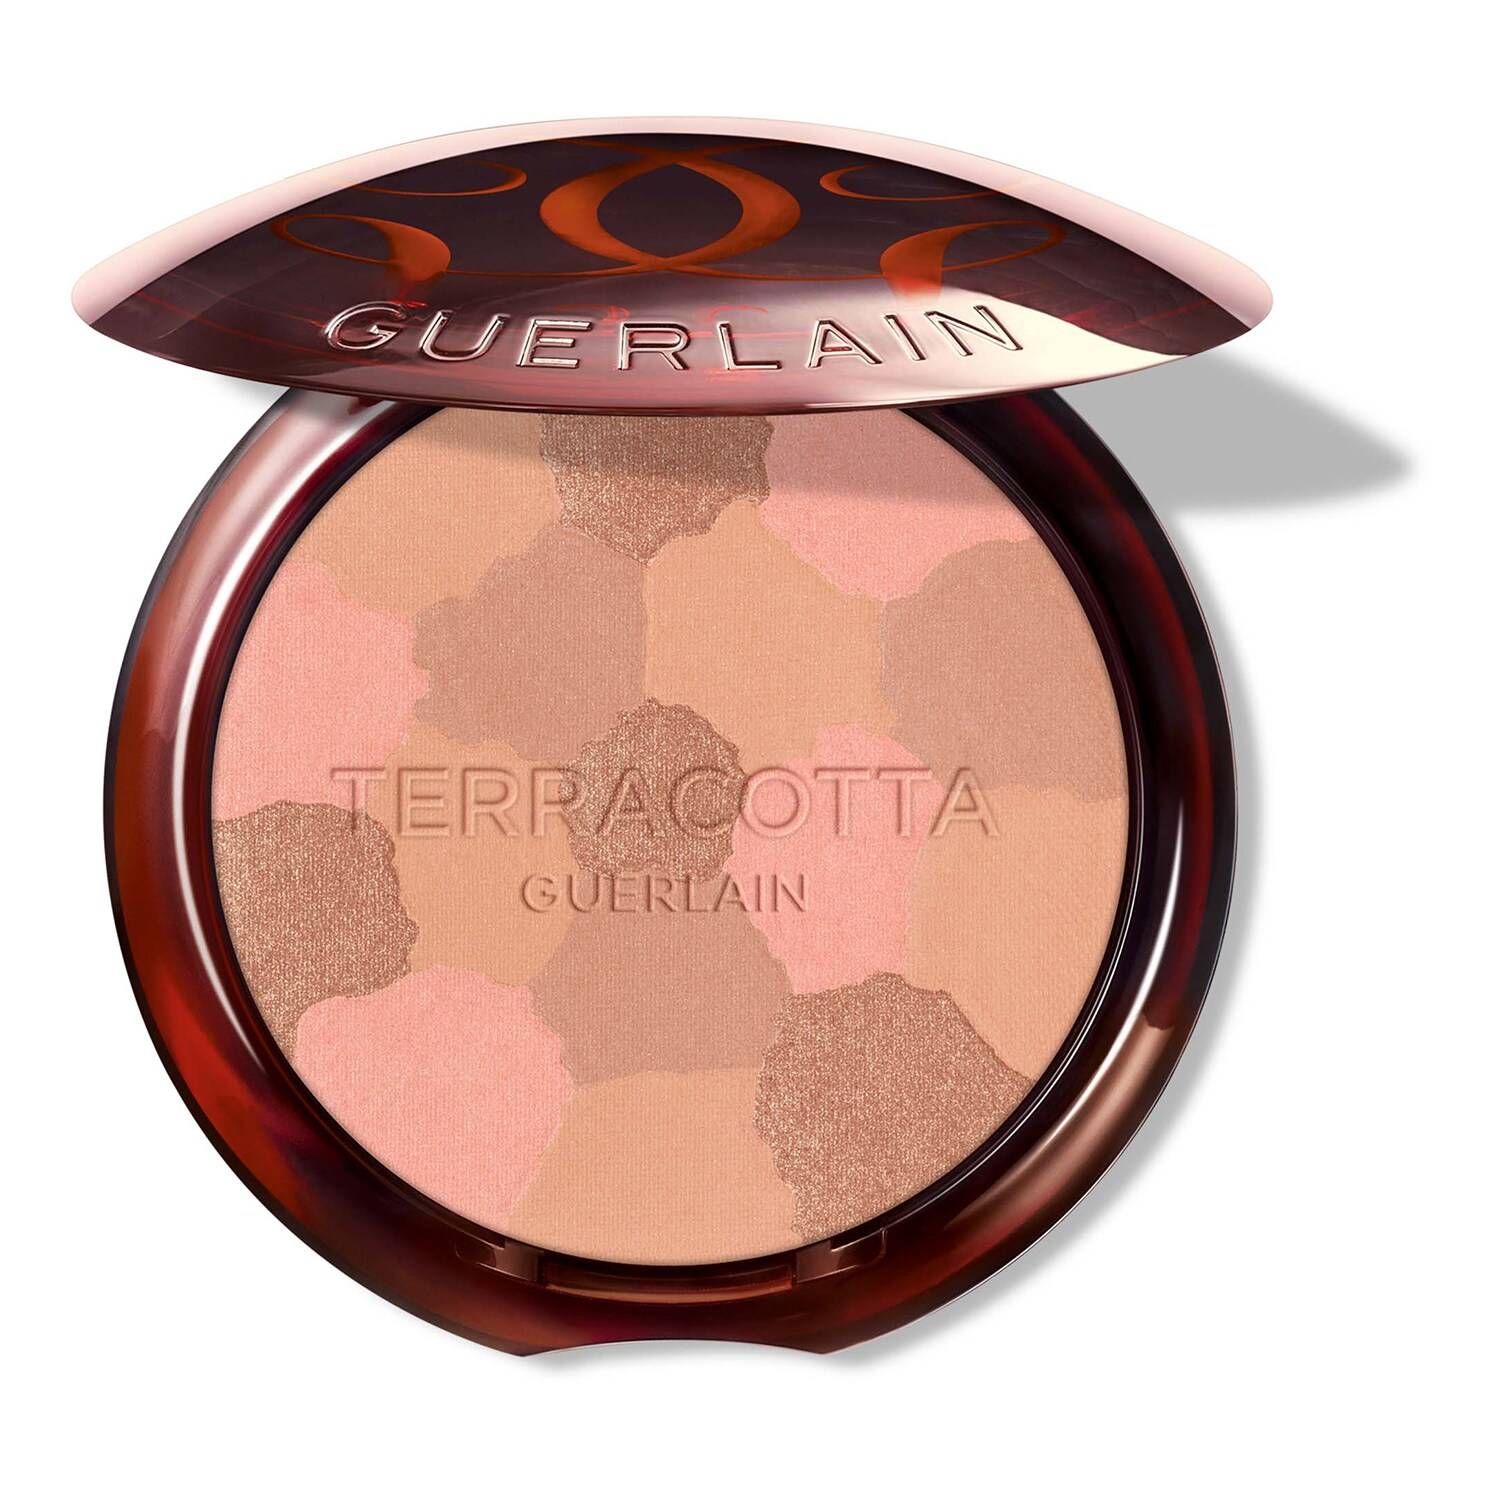 GUERLAIN Terracotta Light The Sun-Kissed Natural Healthy Glow Powder 10g MEDIUM COOL